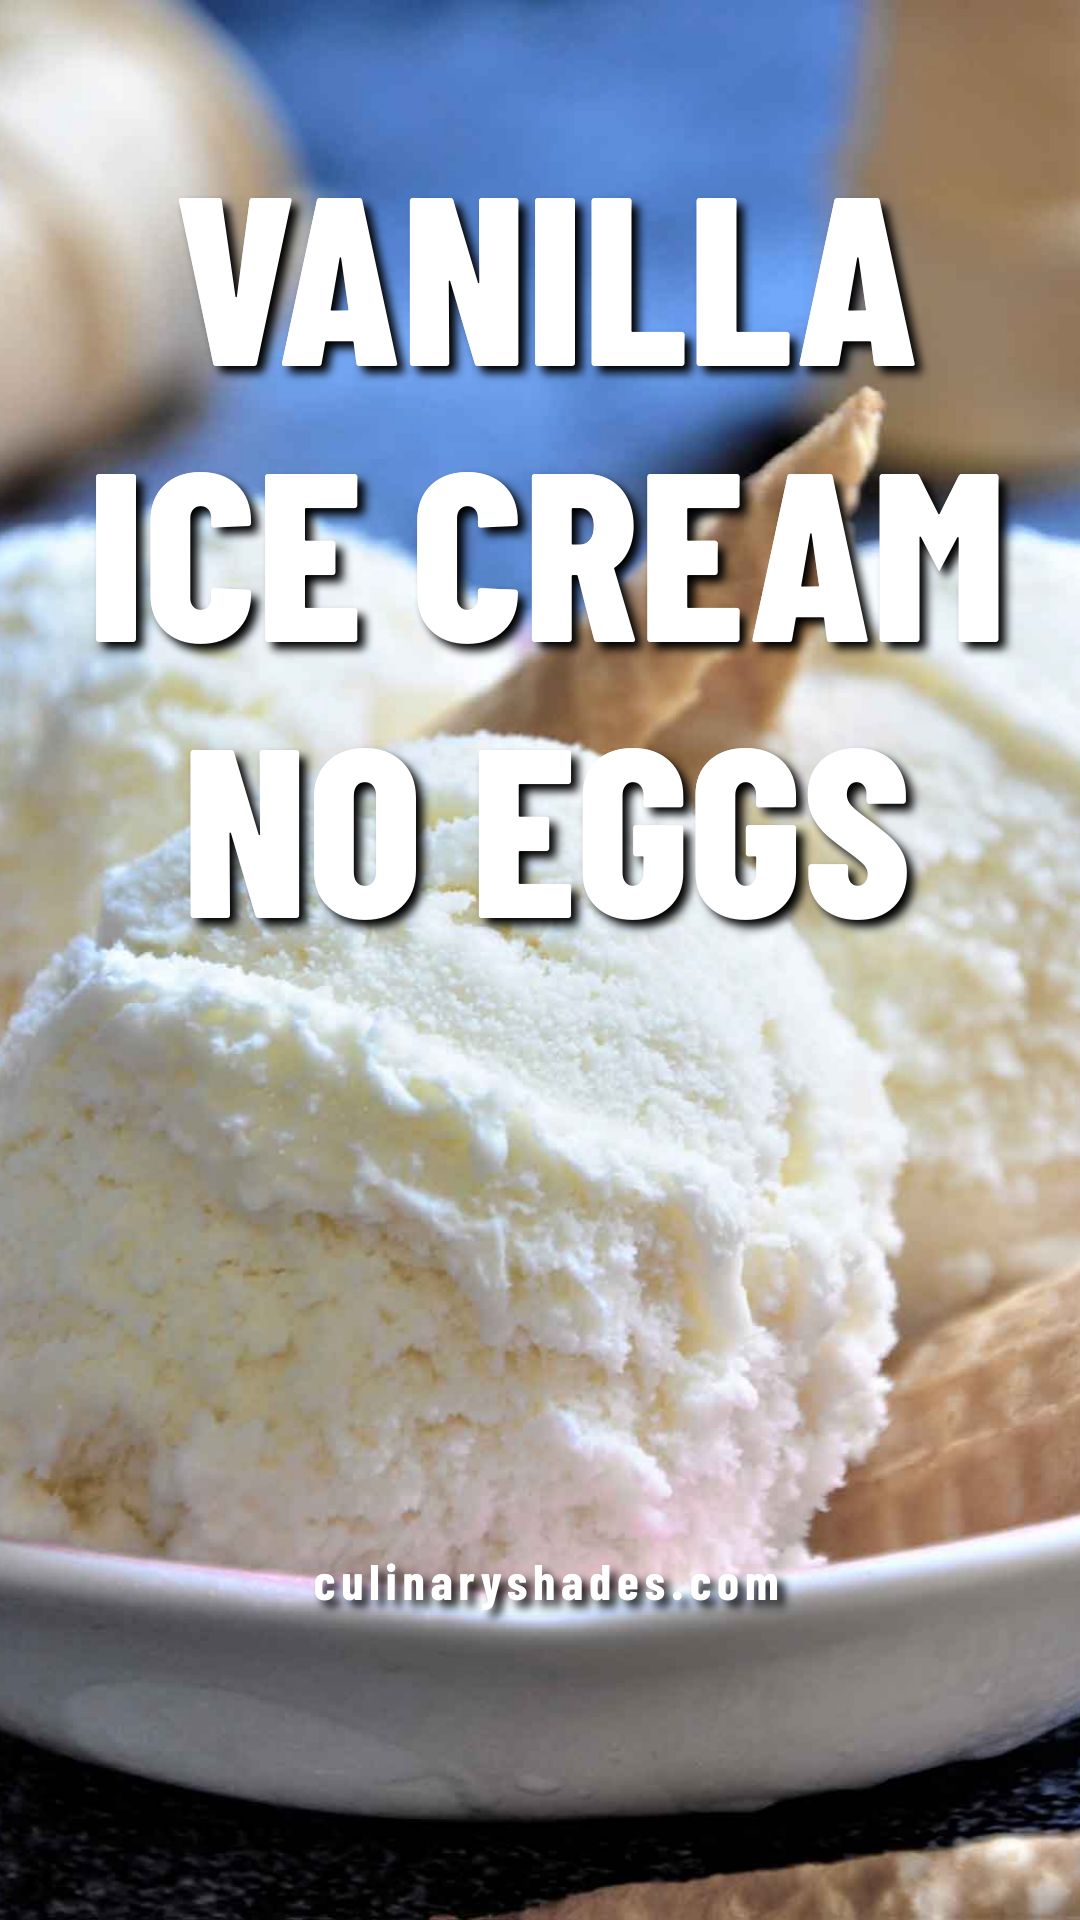 Vanilla ice cream scoops.